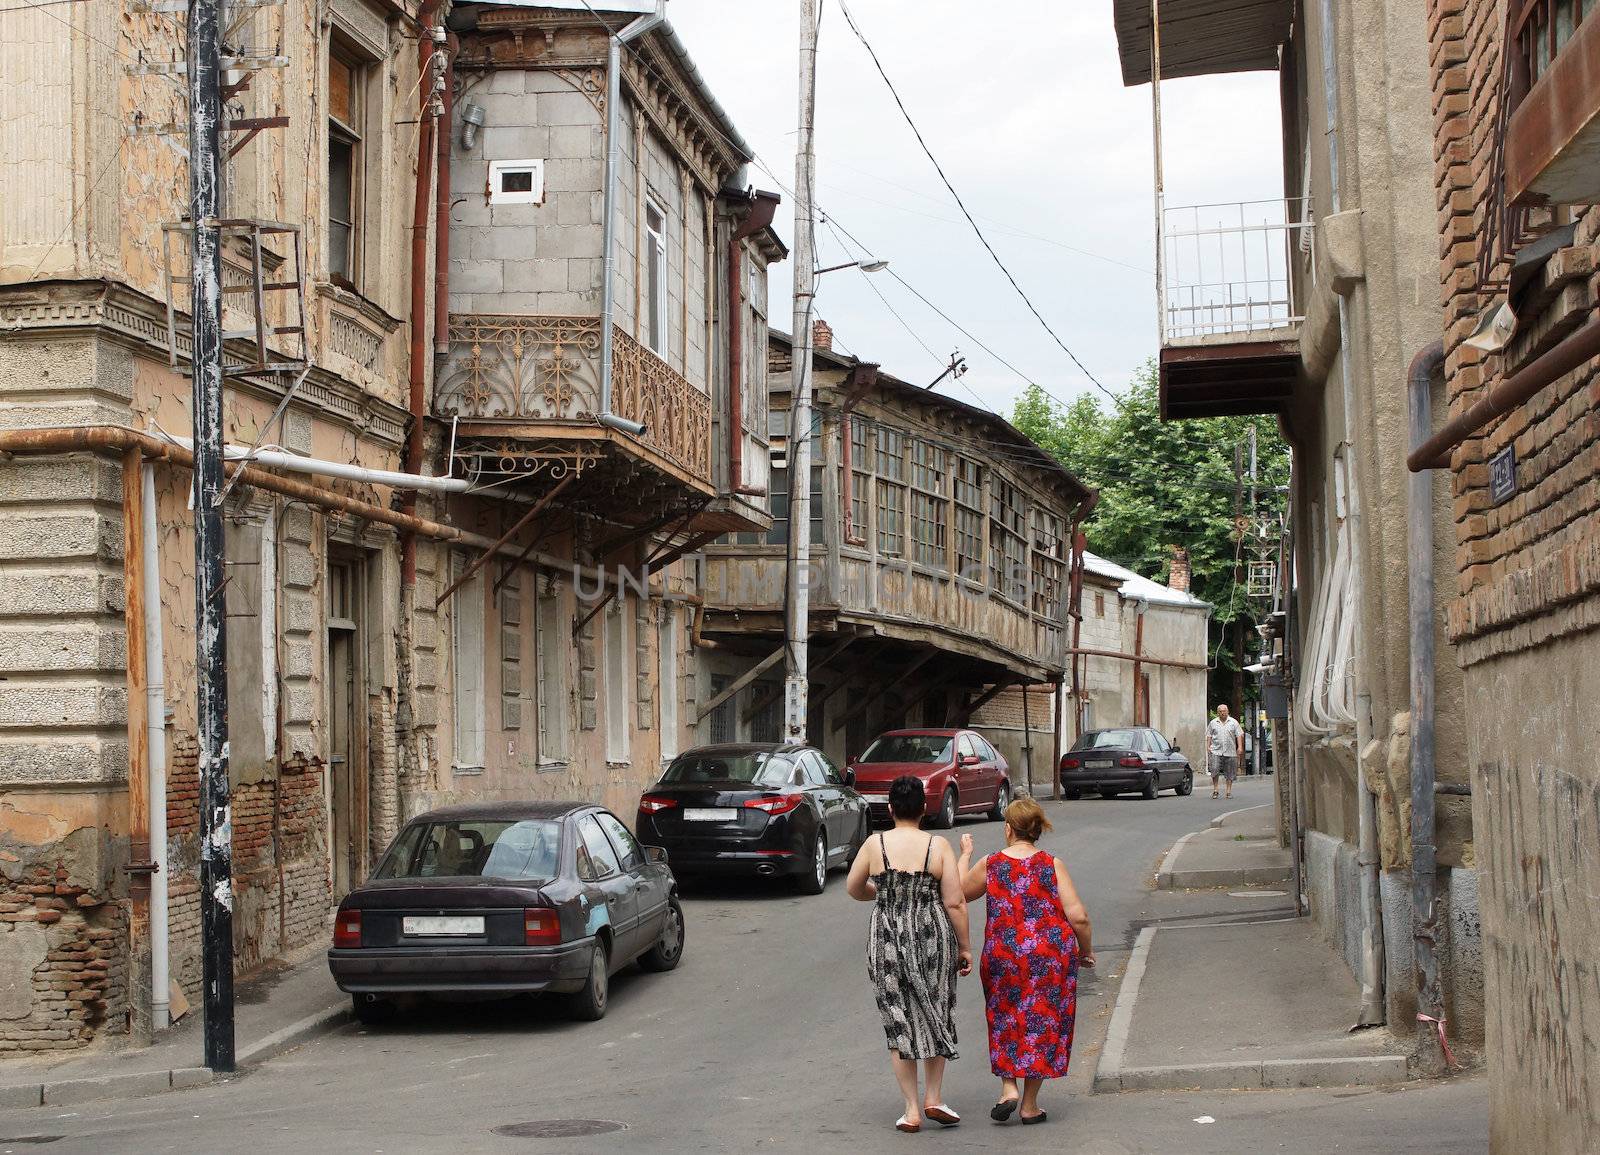 TBILISI, GEORGIA - JUNE 29, 2014: Characteristic scene of the historic district of Tbilisi on June 29, 2014 in Georgia, Europe